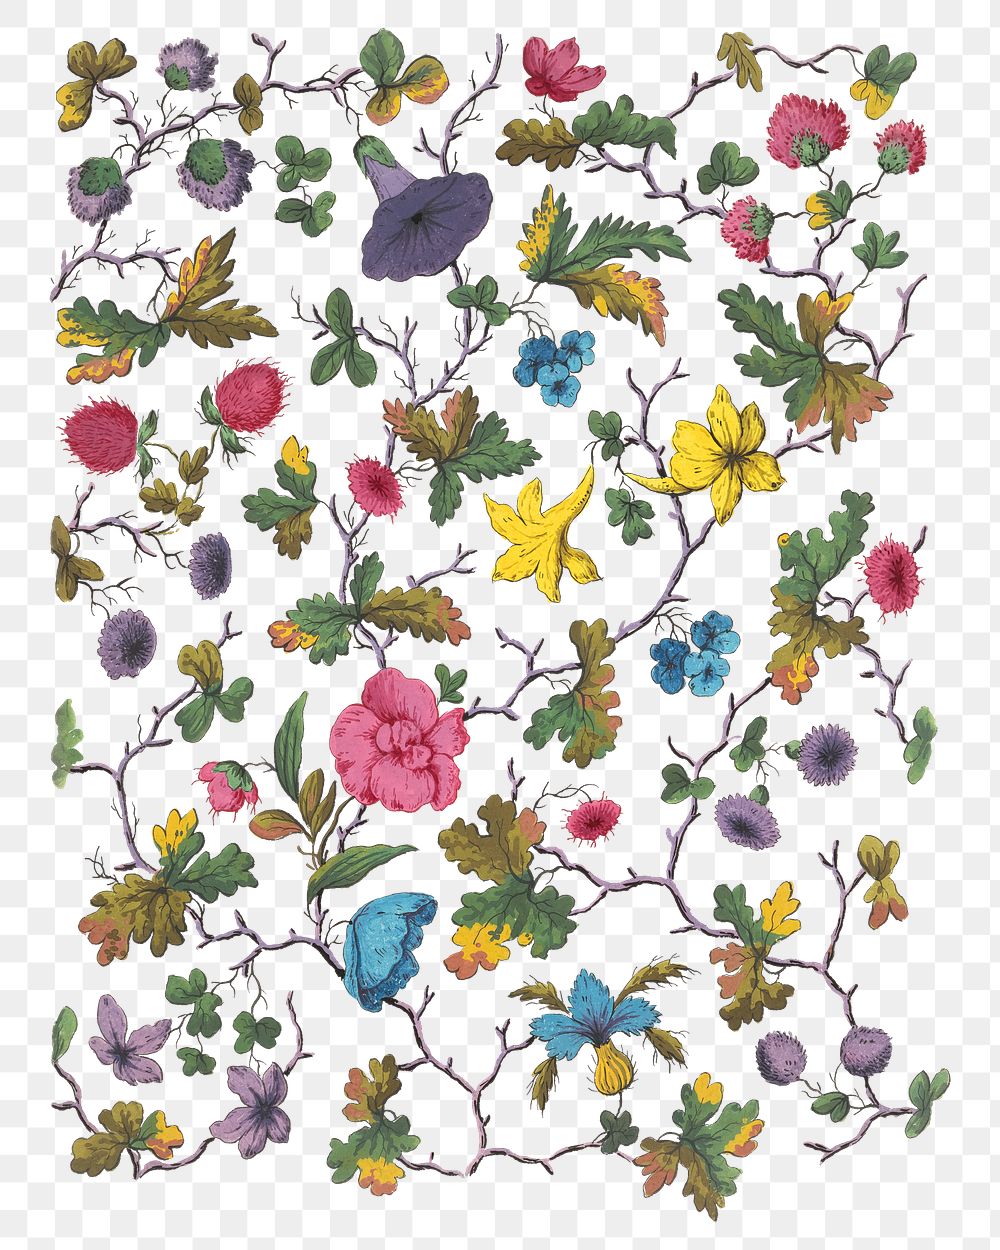 Flower png vintage illustration, transparent background. Remixed by rawpixel. 